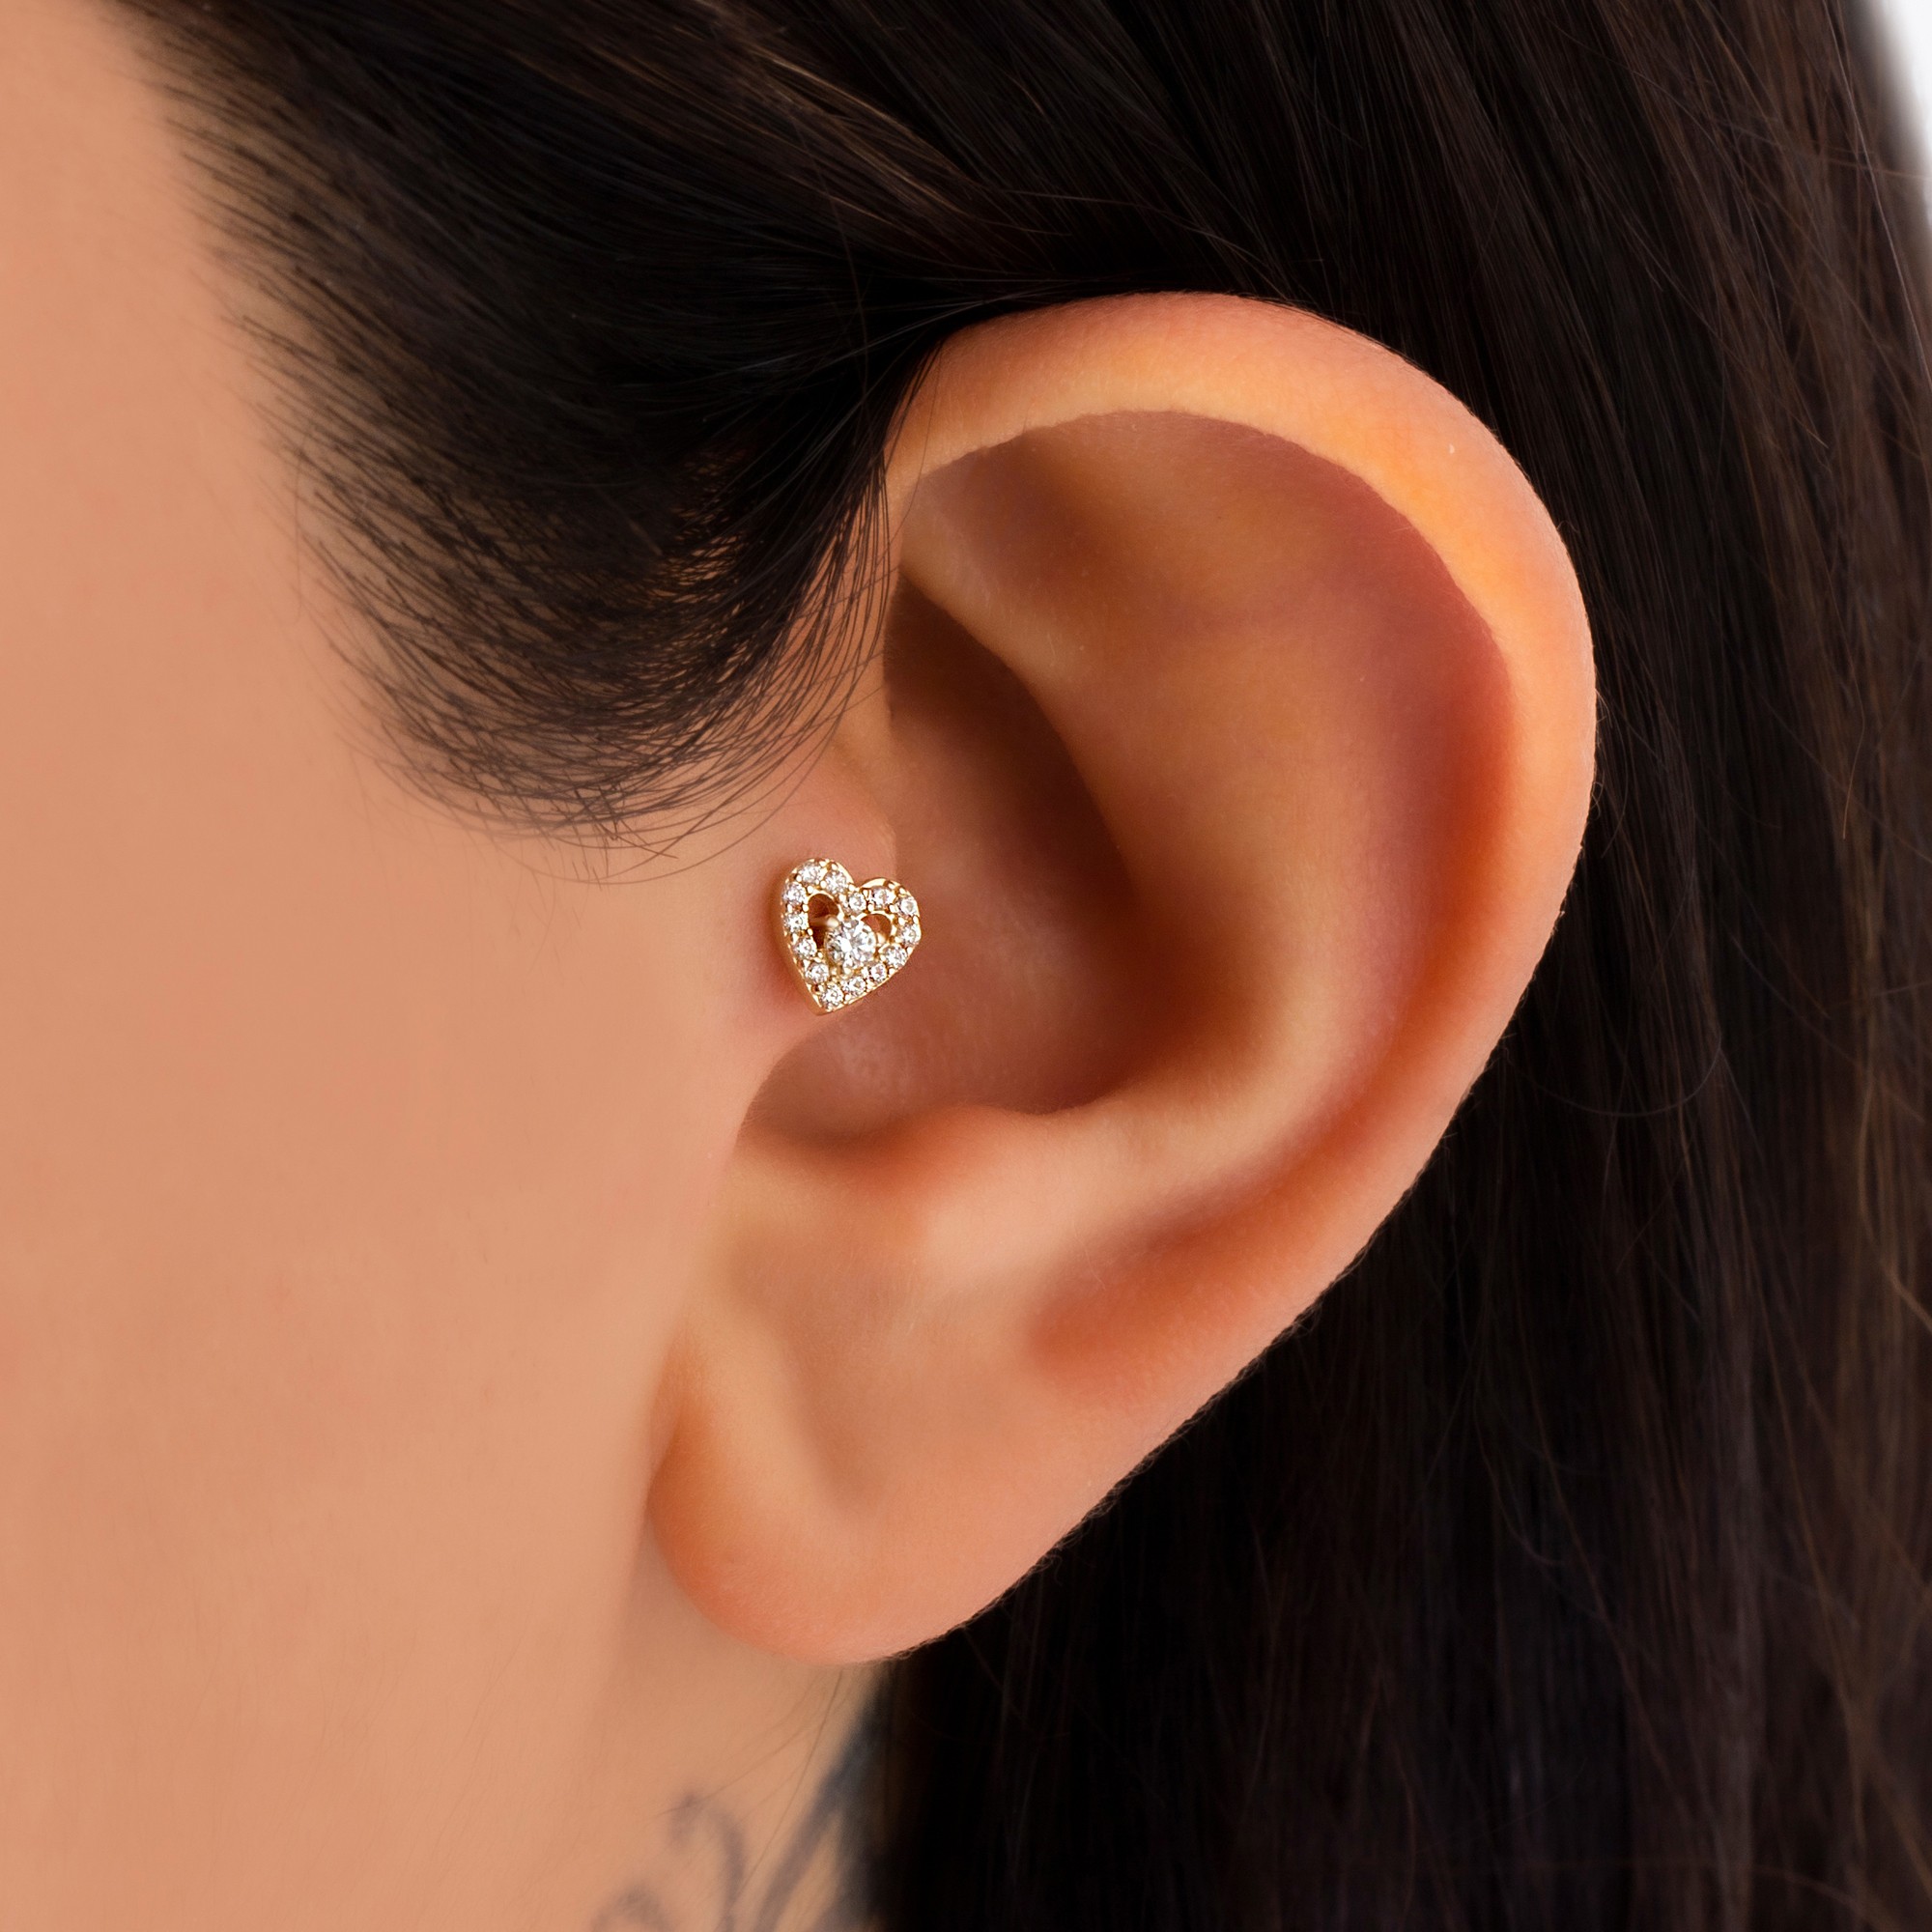 14 Carat Gold Stone Design Heart Piercing